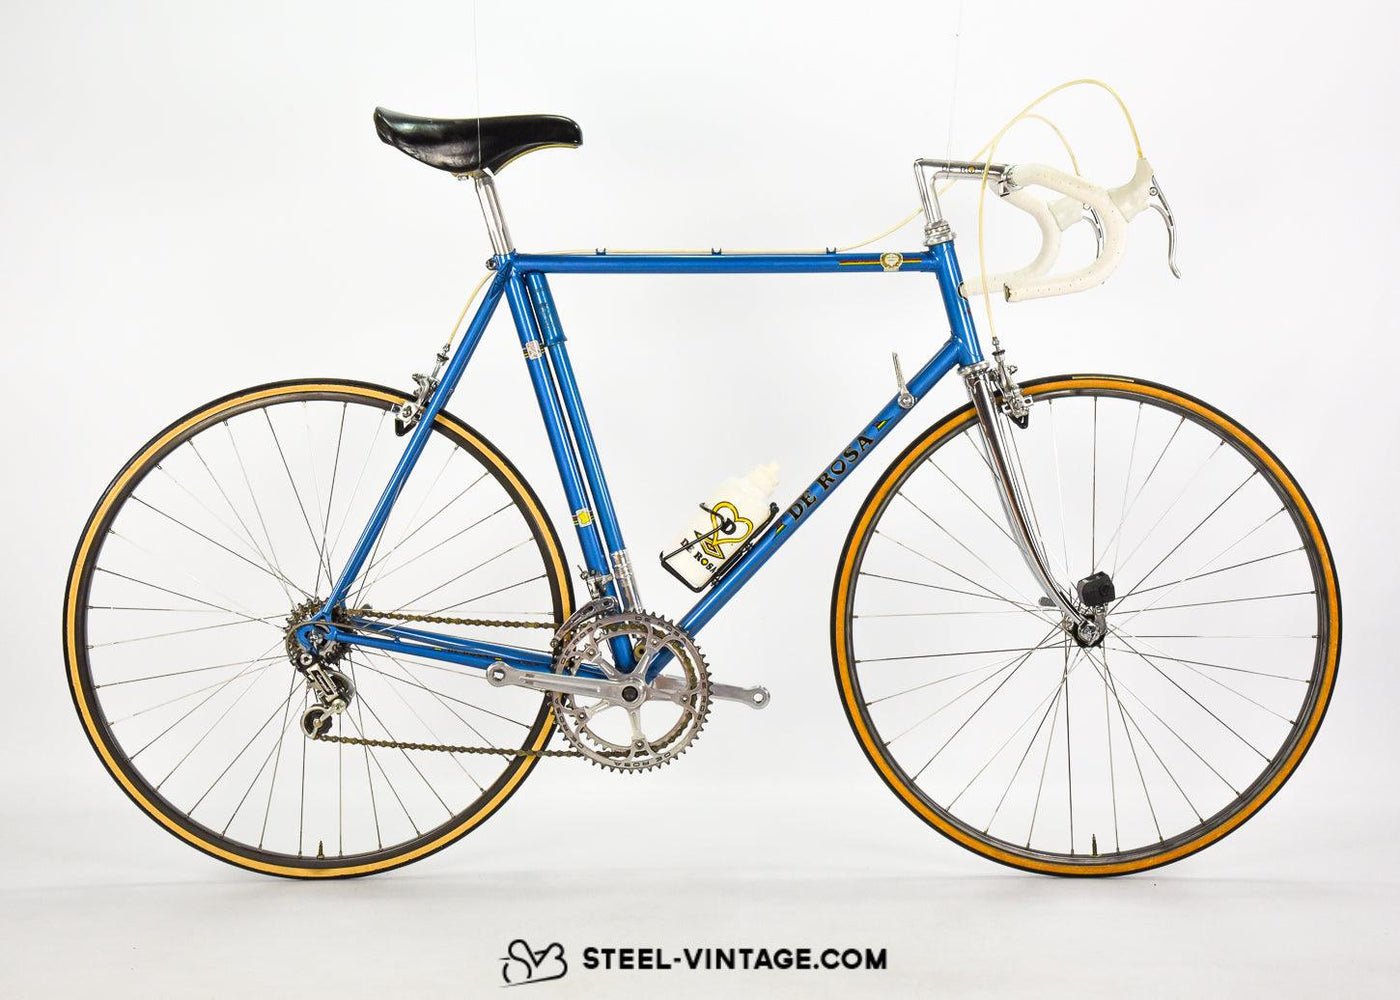 De Rosa Strada Record Classic Road Bicycle 1978 - Steel Vintage Bikes